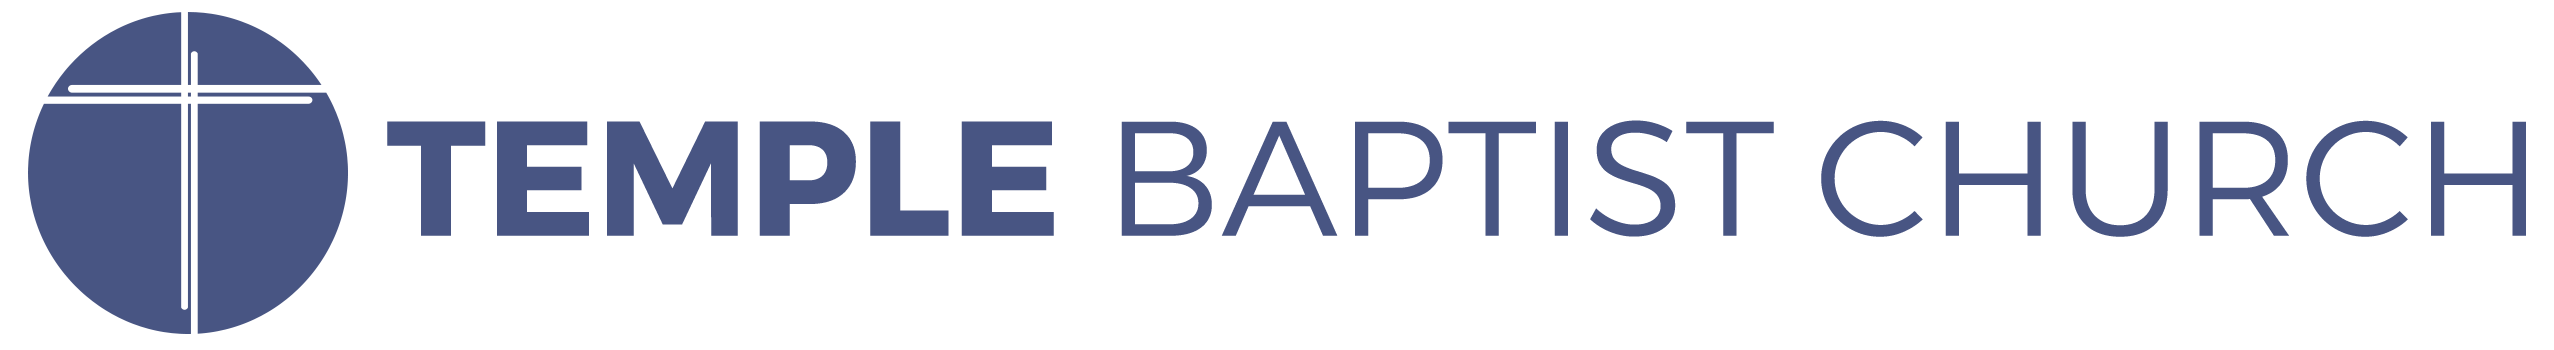 Temple Baptist Church Logo